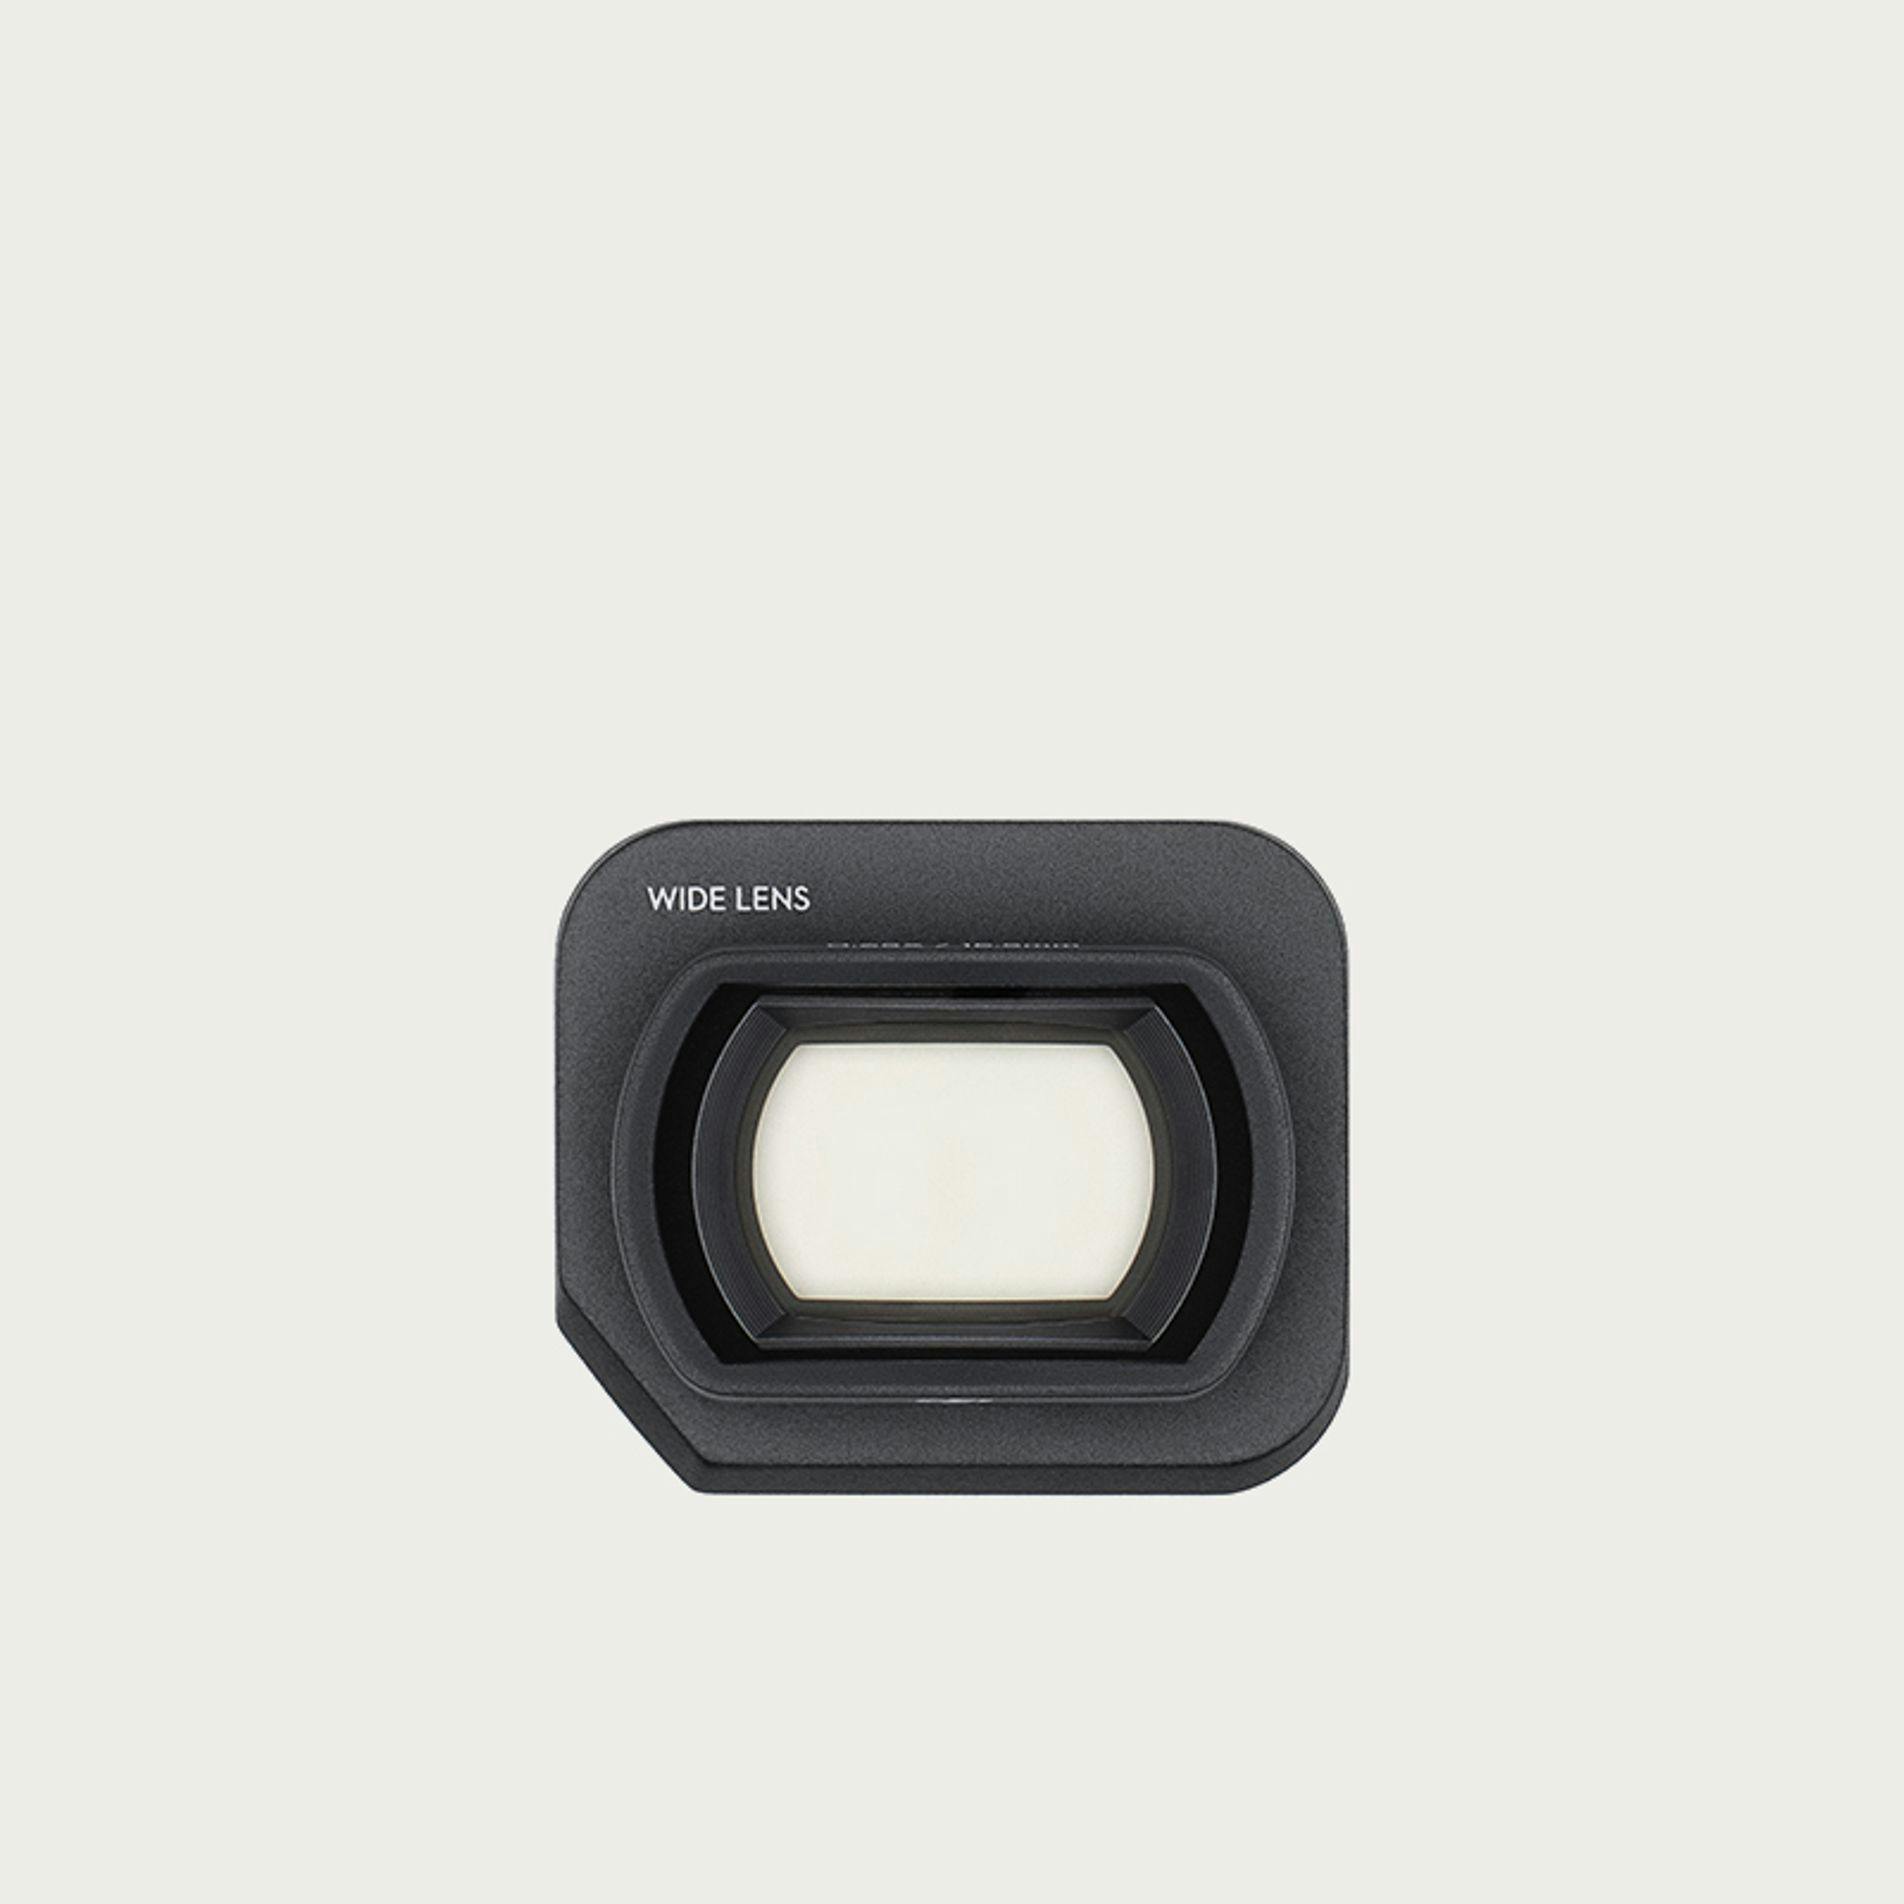 Mavic 3 Classic Wide-Angle Lens